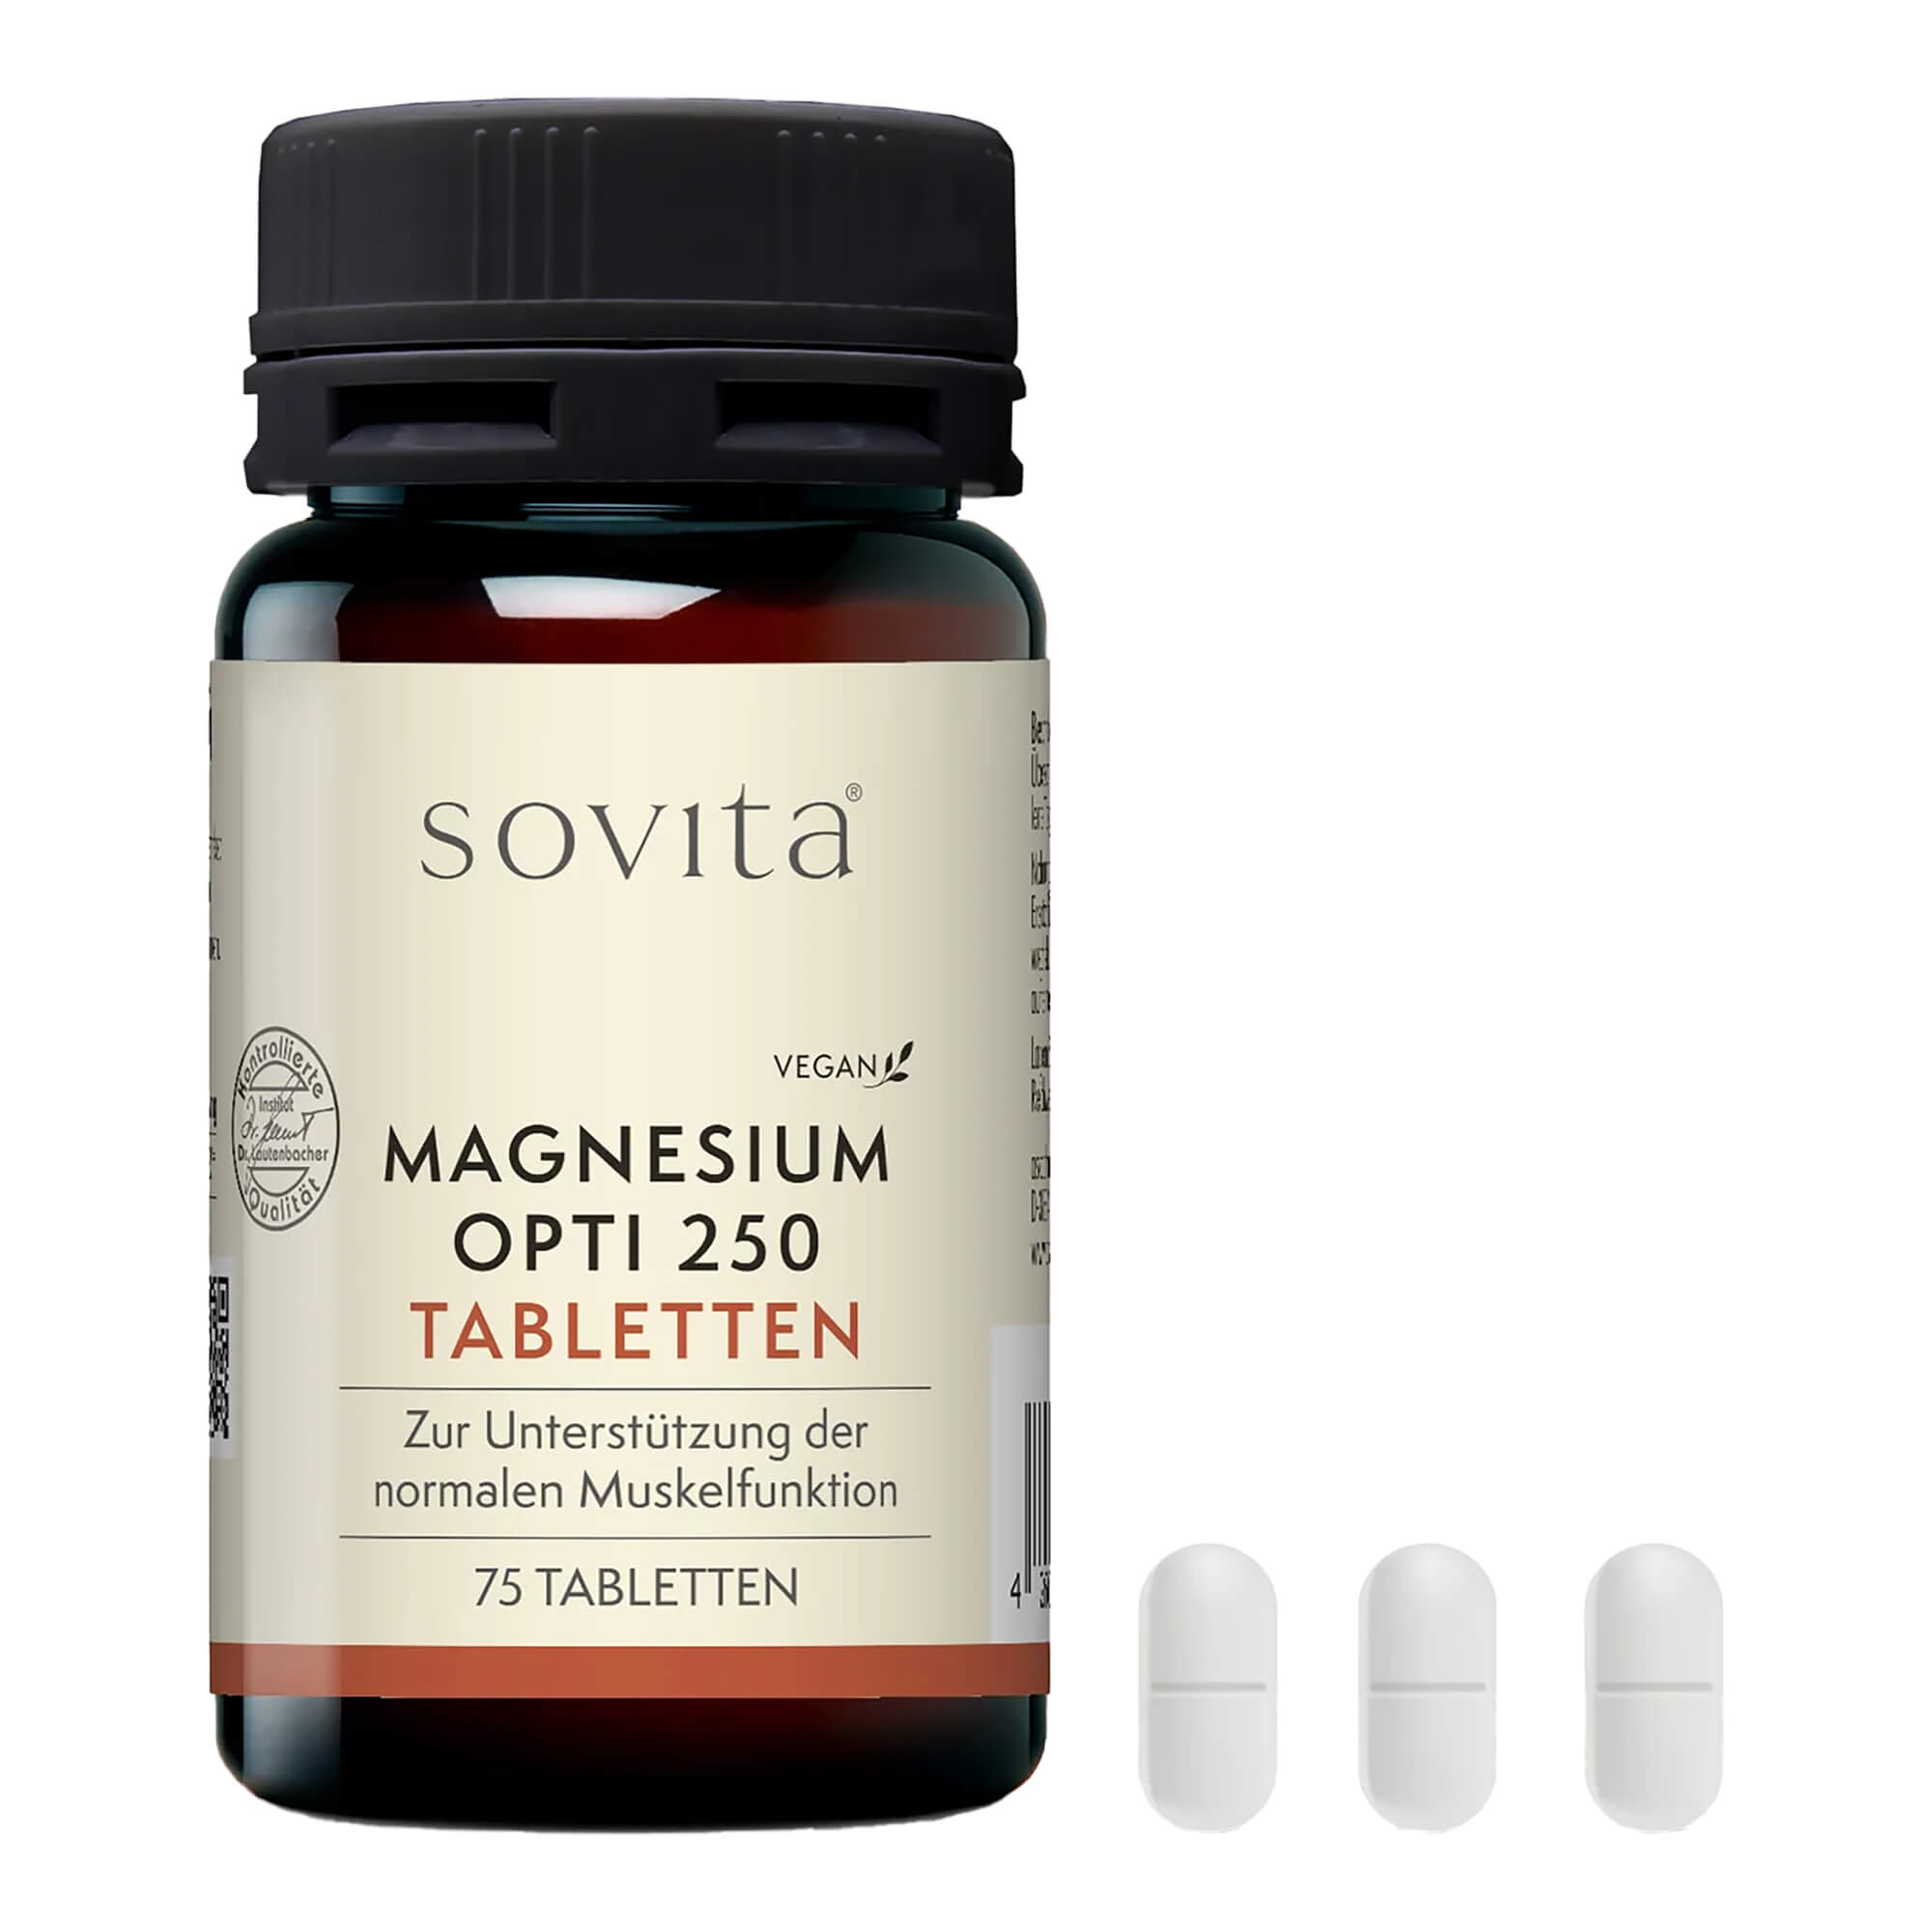 Nahrungsergänzungsmittel mit 250 mg Magnesium.